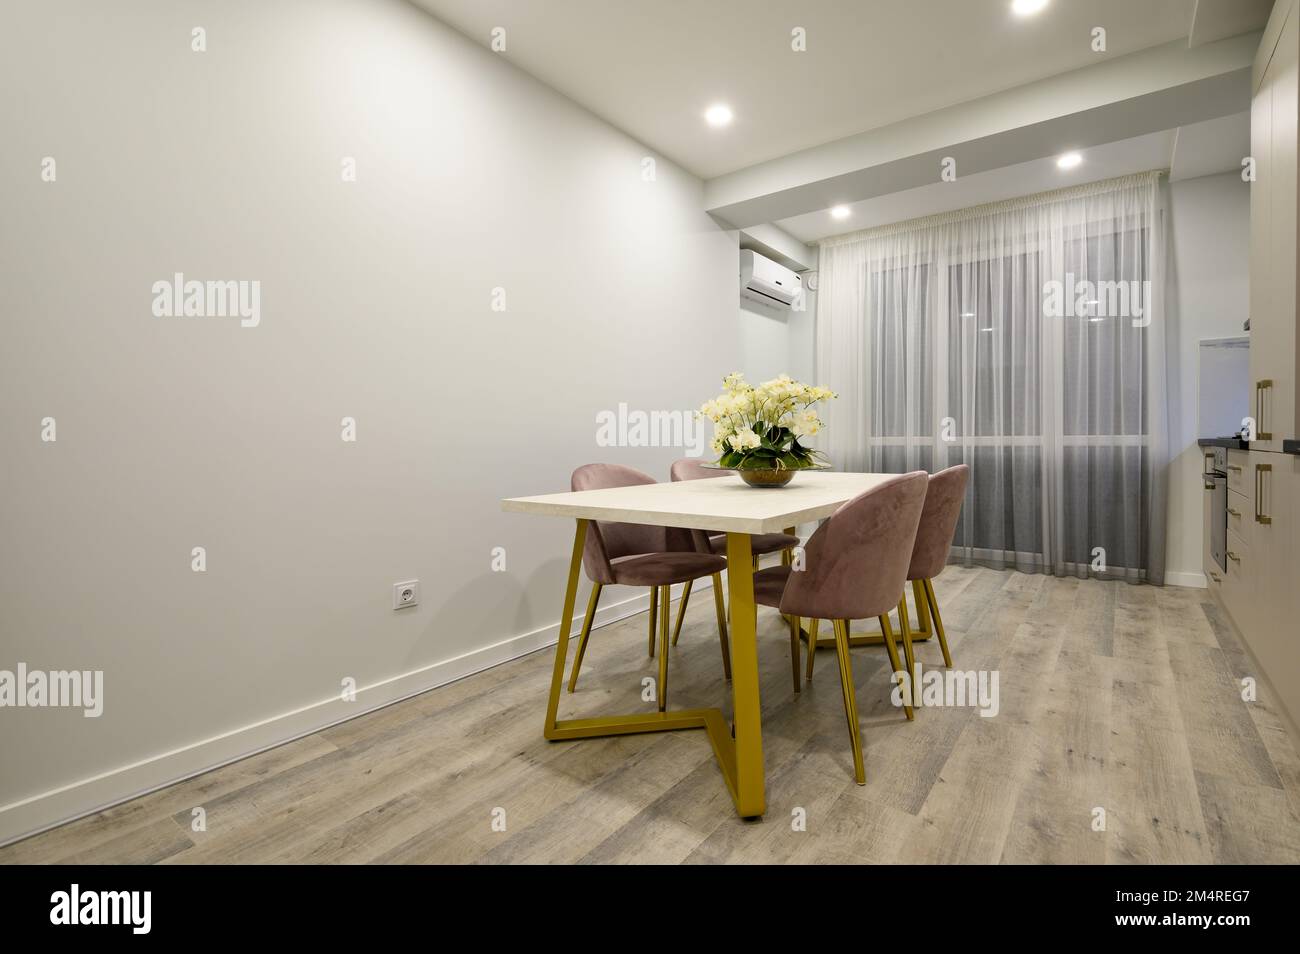 Large beige and cream luxury kitchen interior Stock Photo